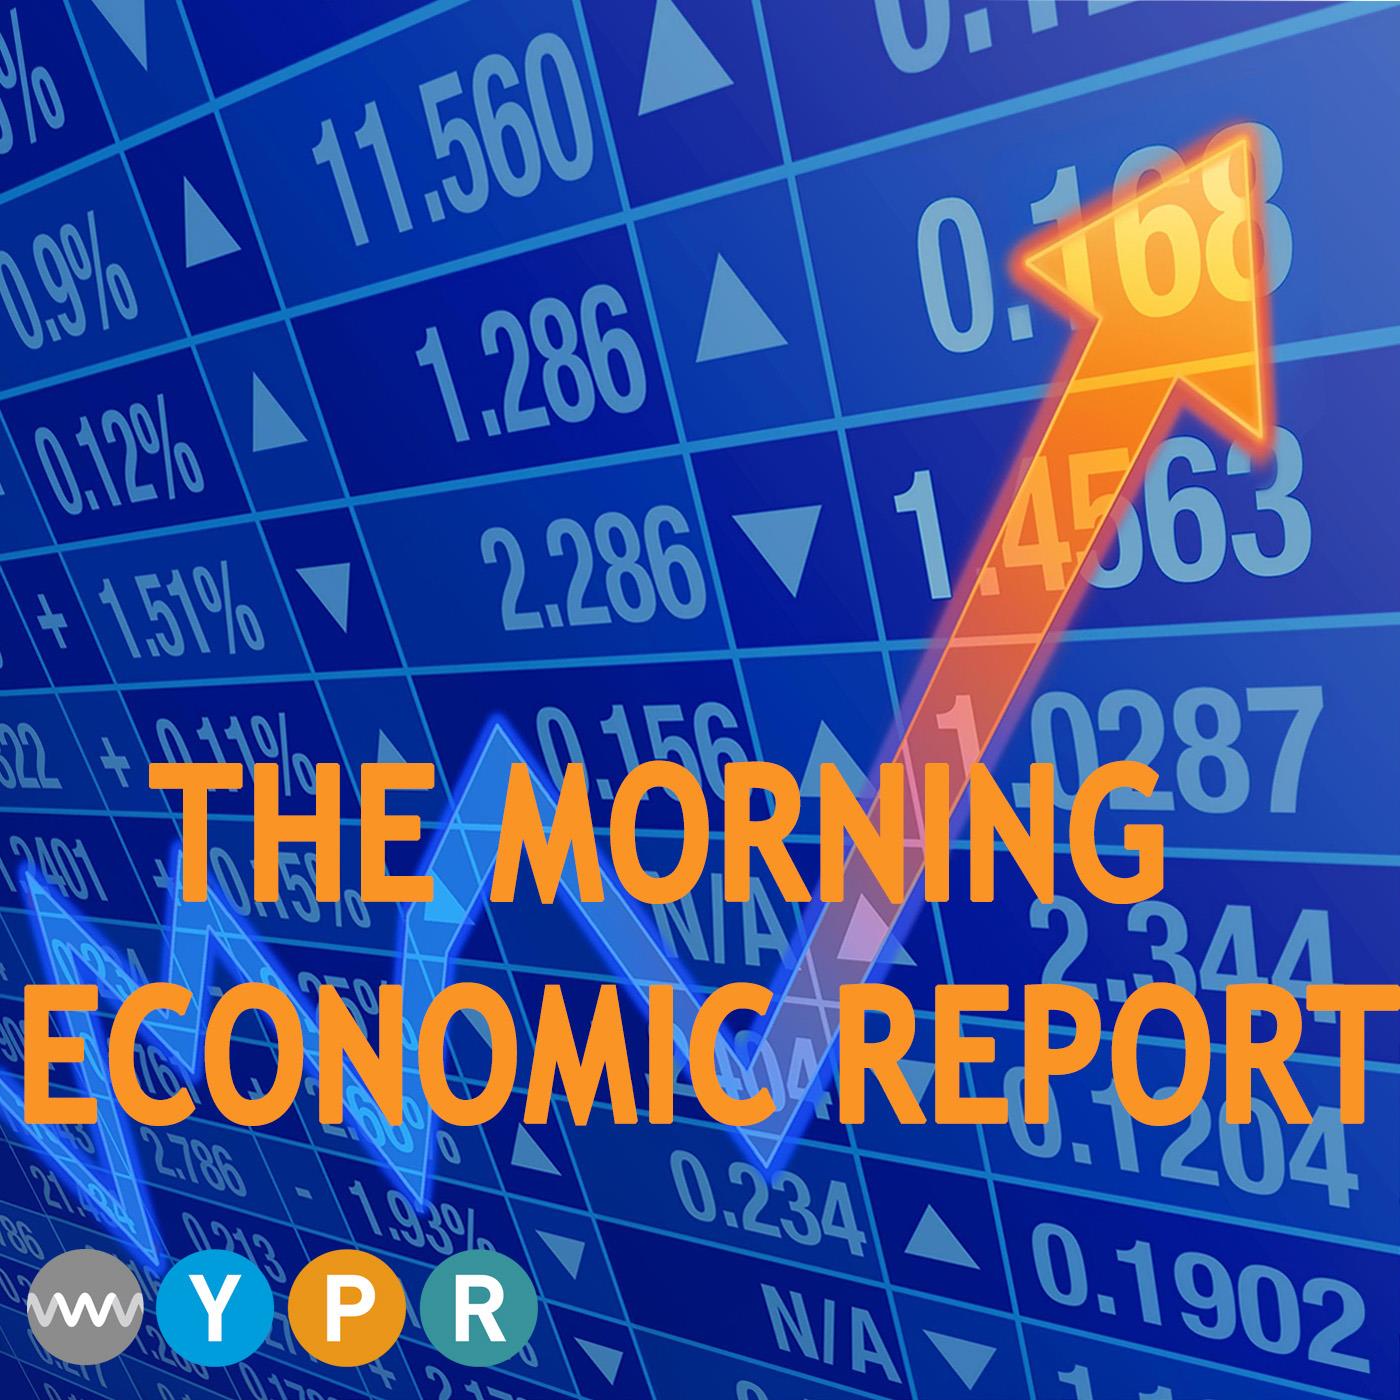 The Morning Economic Report